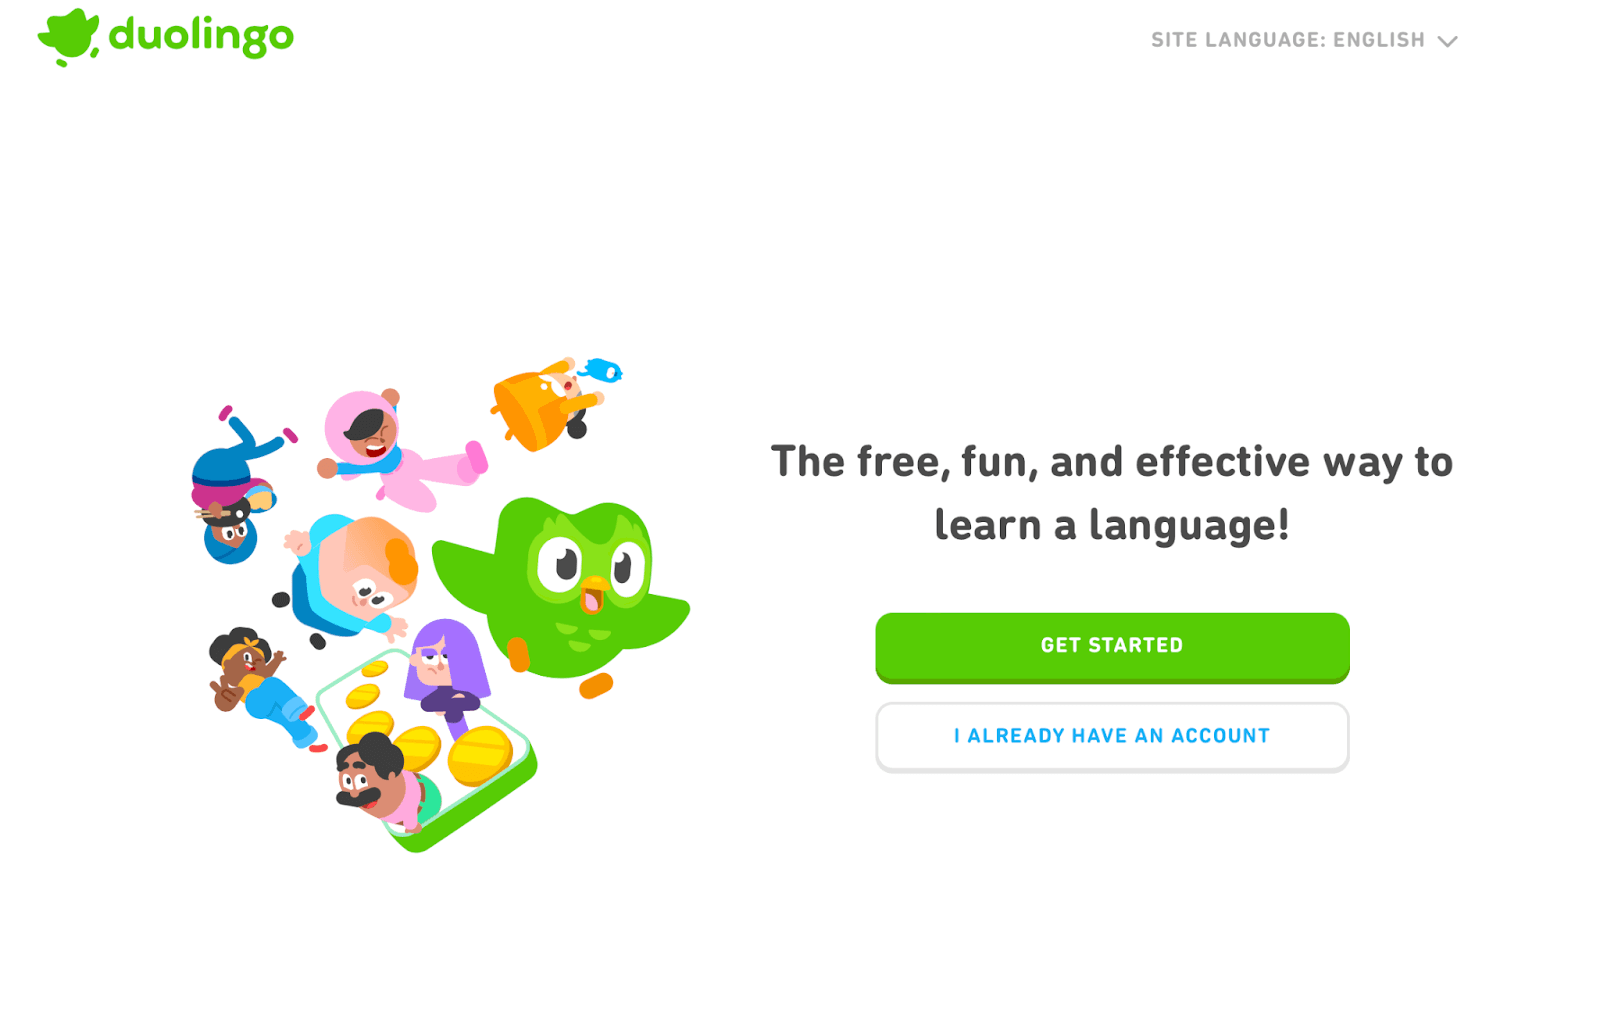 Duolingo mobile app as an advertising method